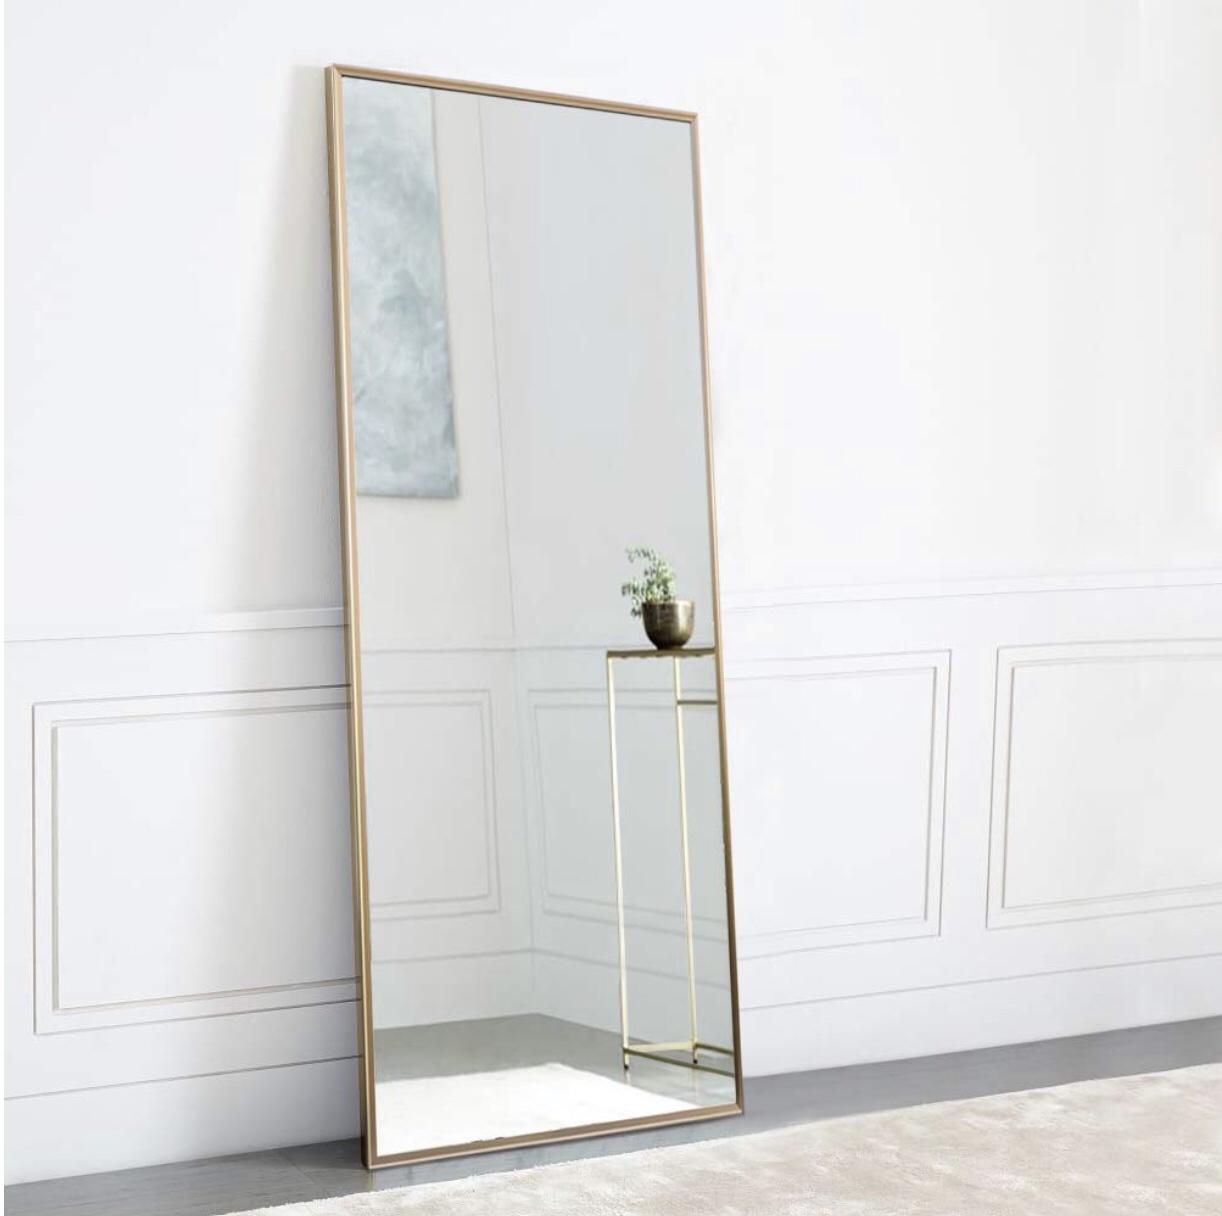 NeuType Full Length Mirror Floor Mirror with Standing Holder Bedroom/Locker Room Standing/Hanging Mirror Dressing Mirror Wall-Mounted Mirror (Golden)